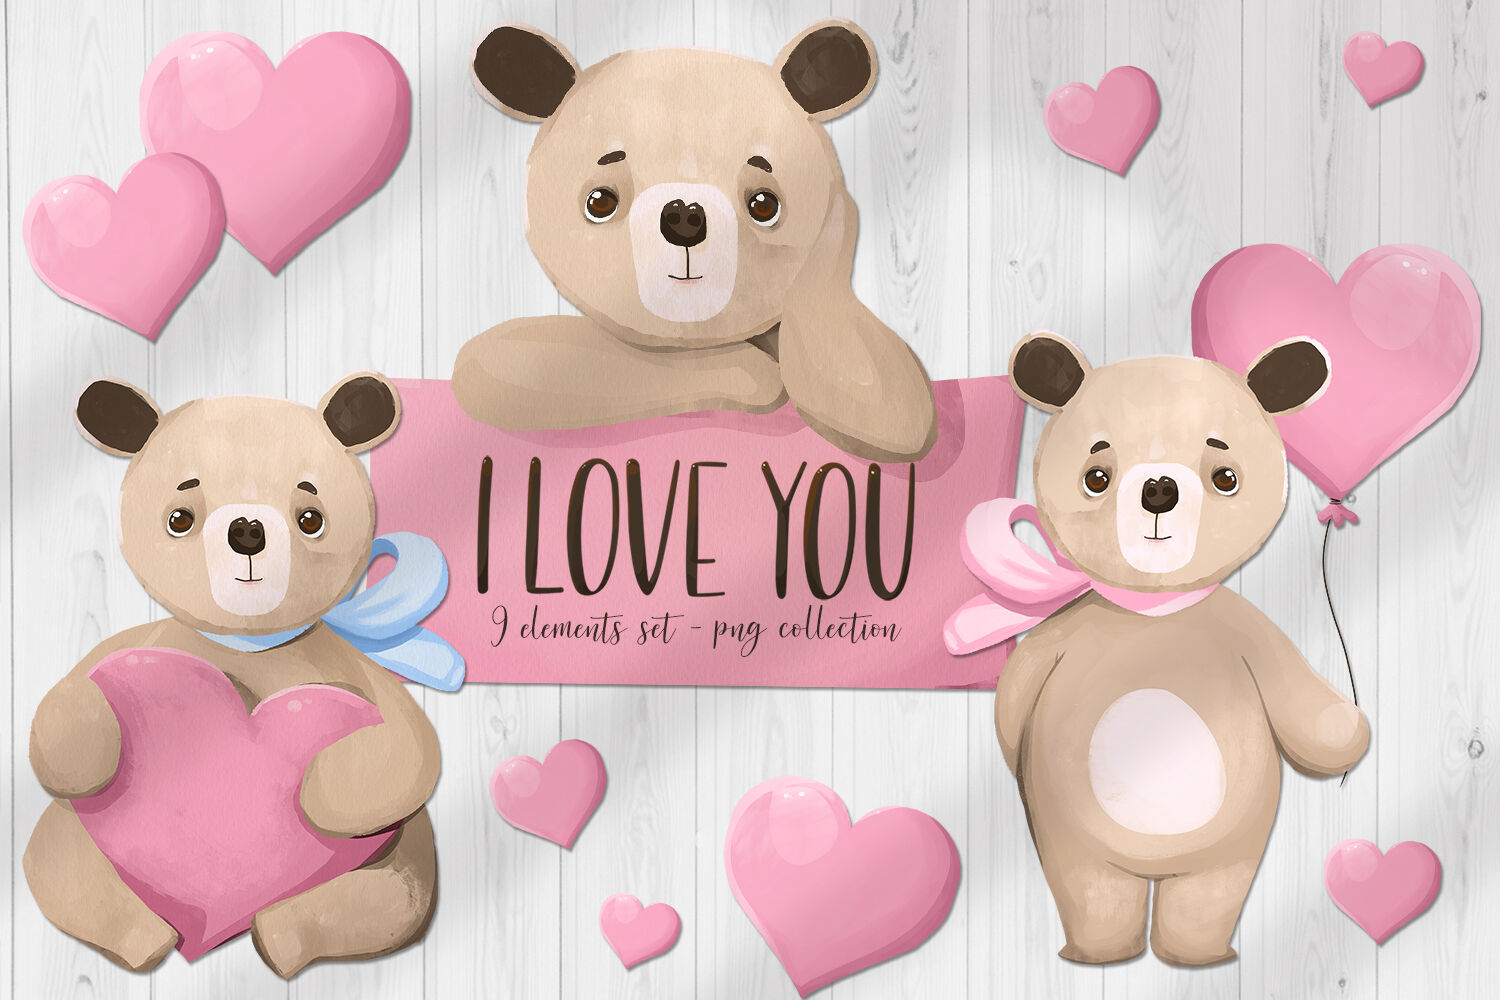 Love Teddy Bears By Digi Potwor Thehungryjpeg Com